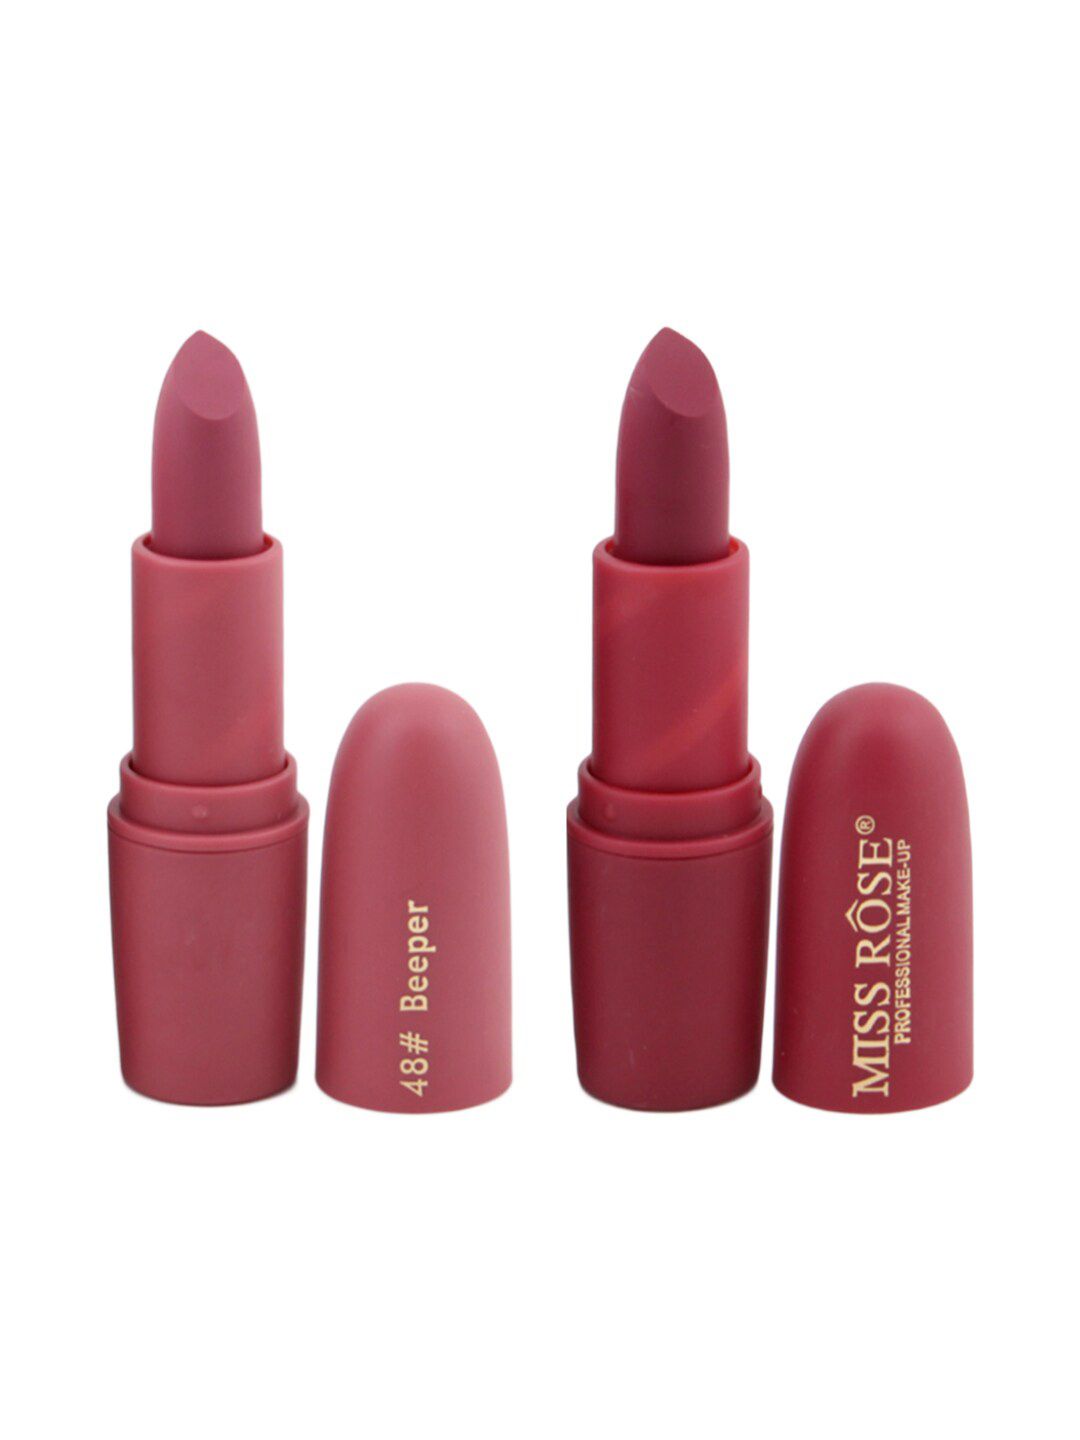 MISS ROSE Set of 2 Matte Creamy Lipsticks - Beeper 48 & Chii 49 Price in India